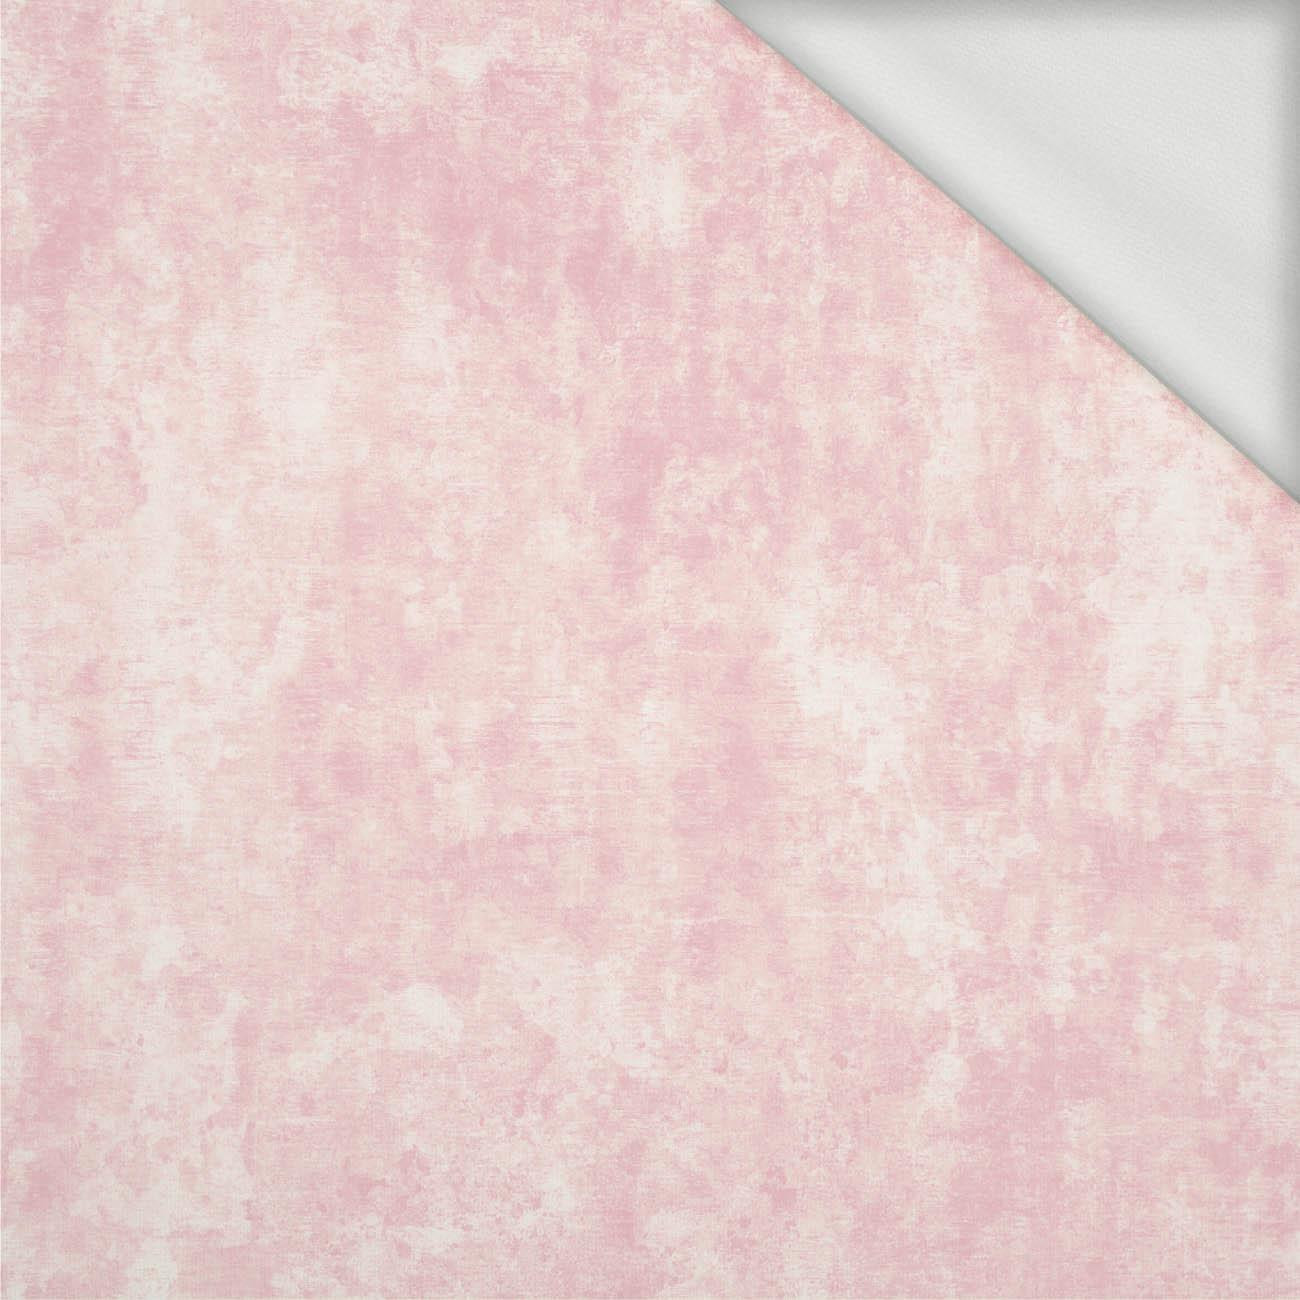 GRUNGE (blass rosa) - sommersweat